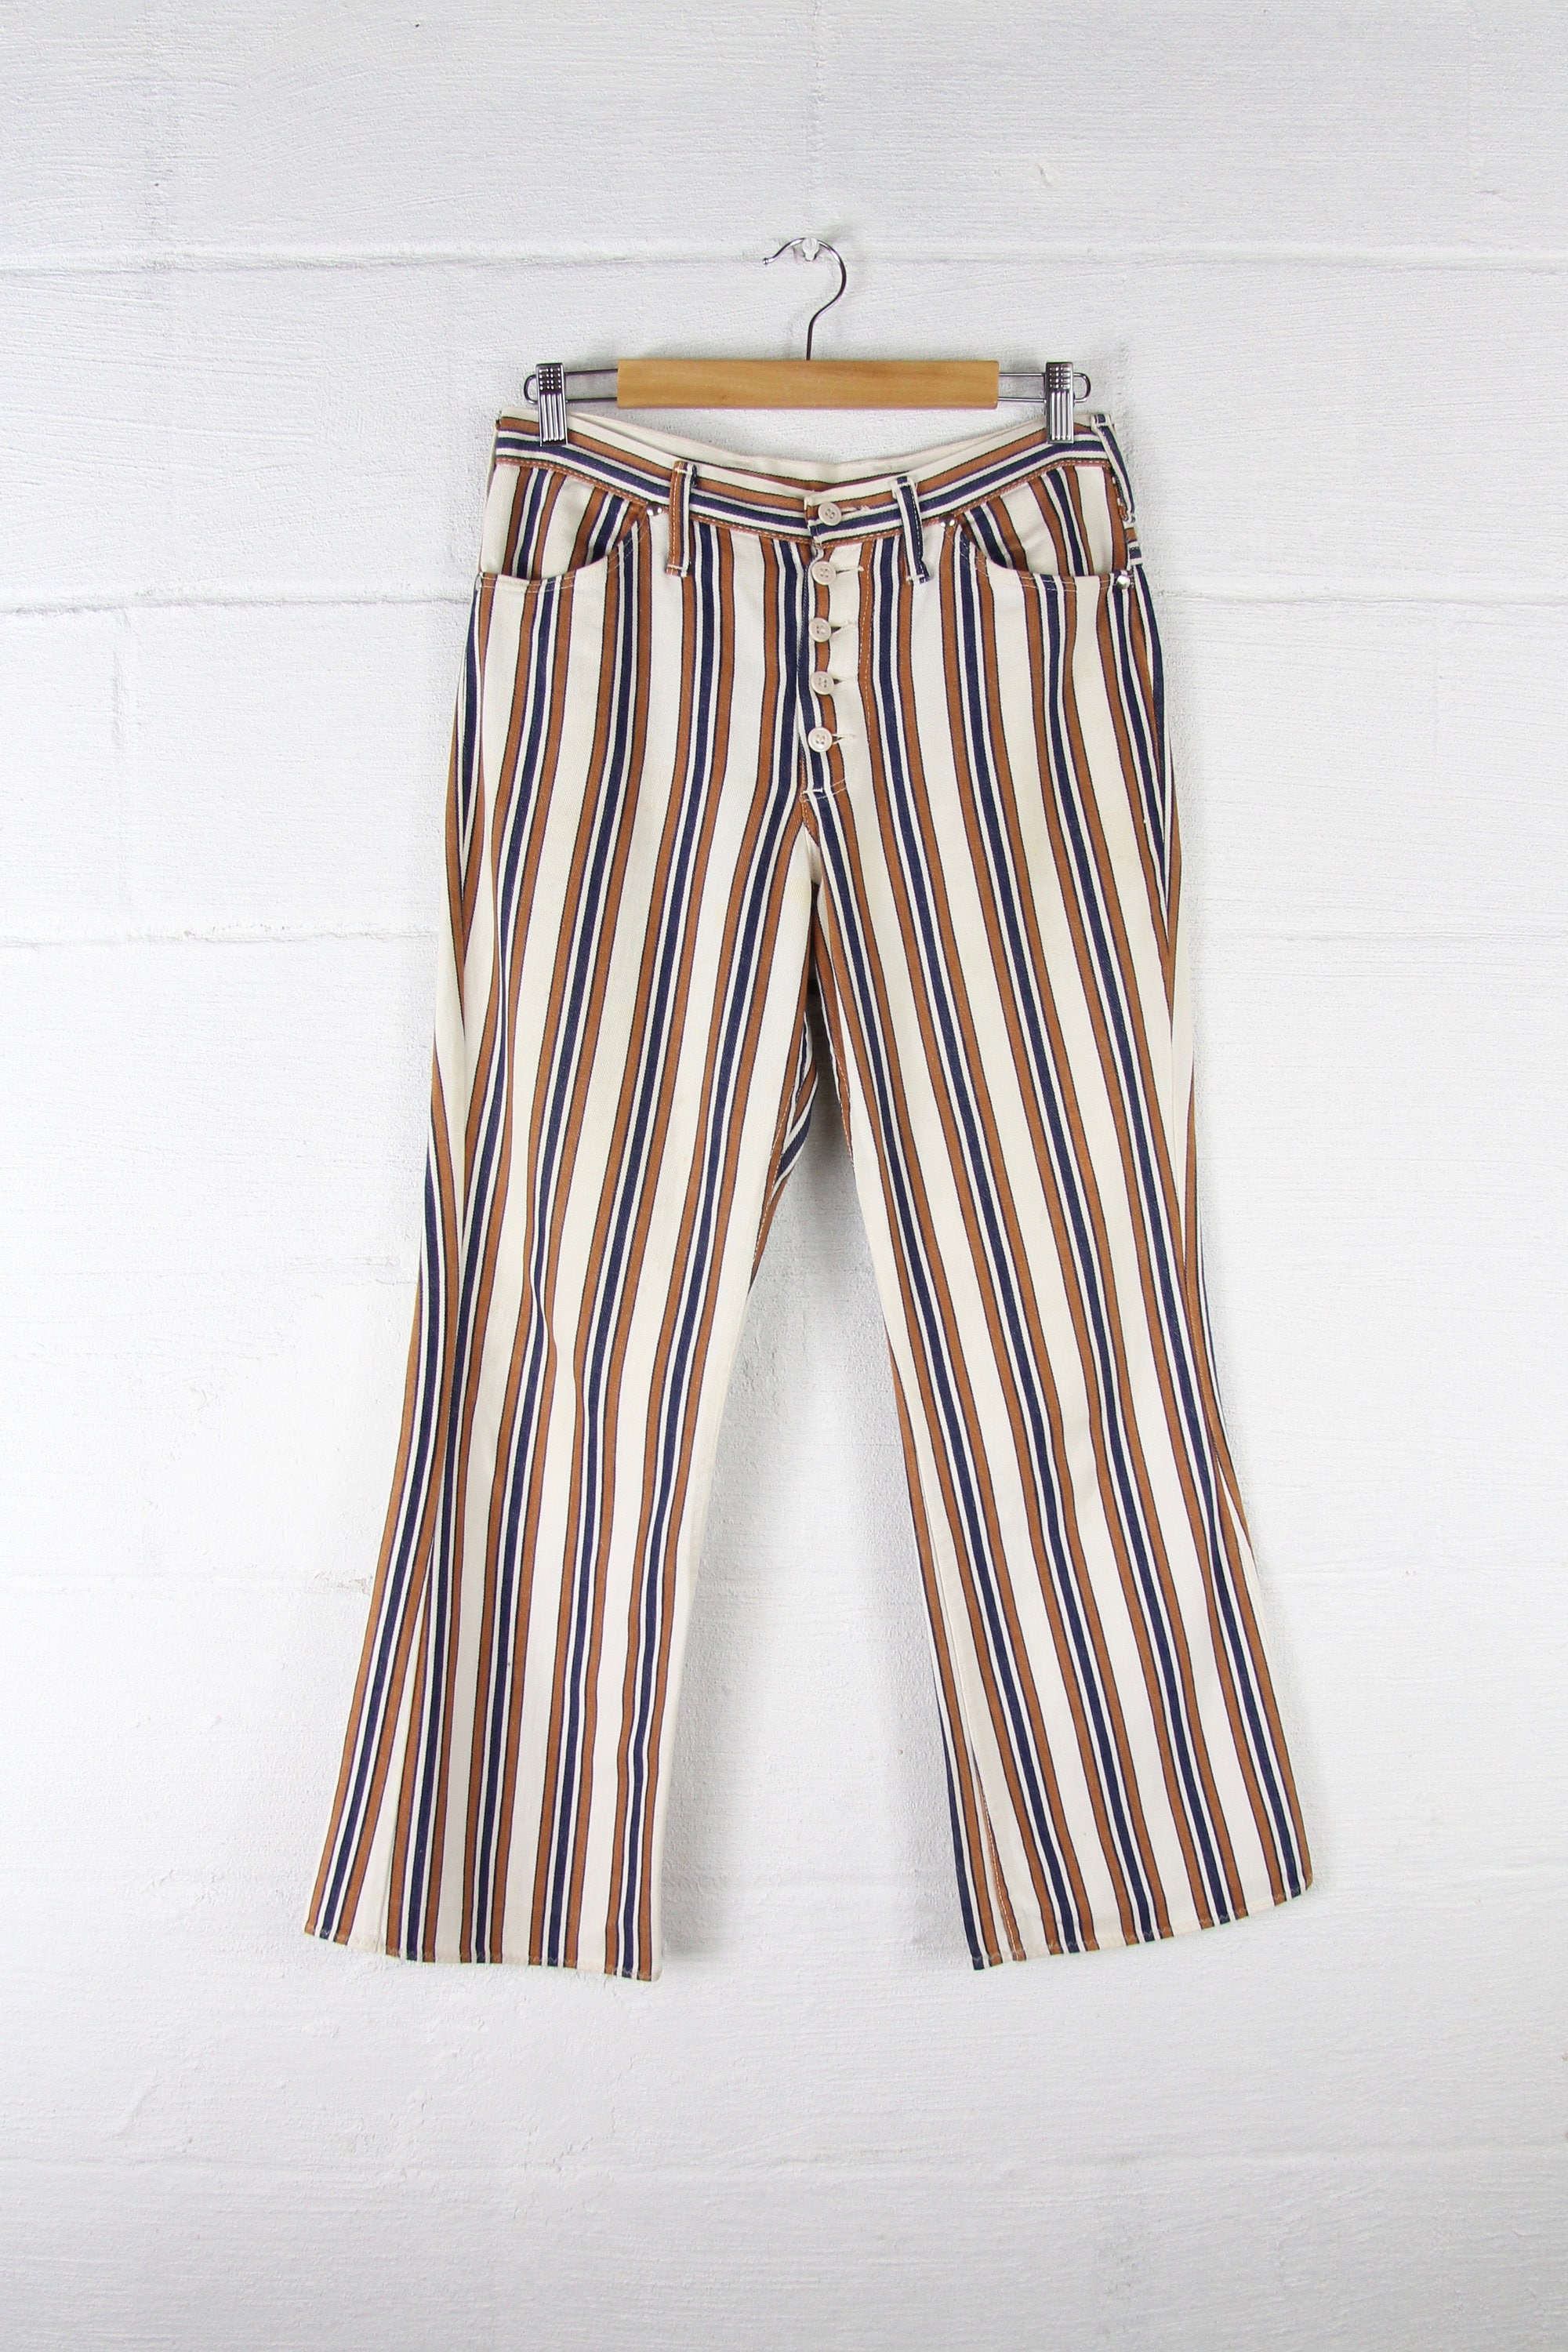 RARE 70s Striped Maverick Jeans Bellbottoms Men's Vintage Seventies ...